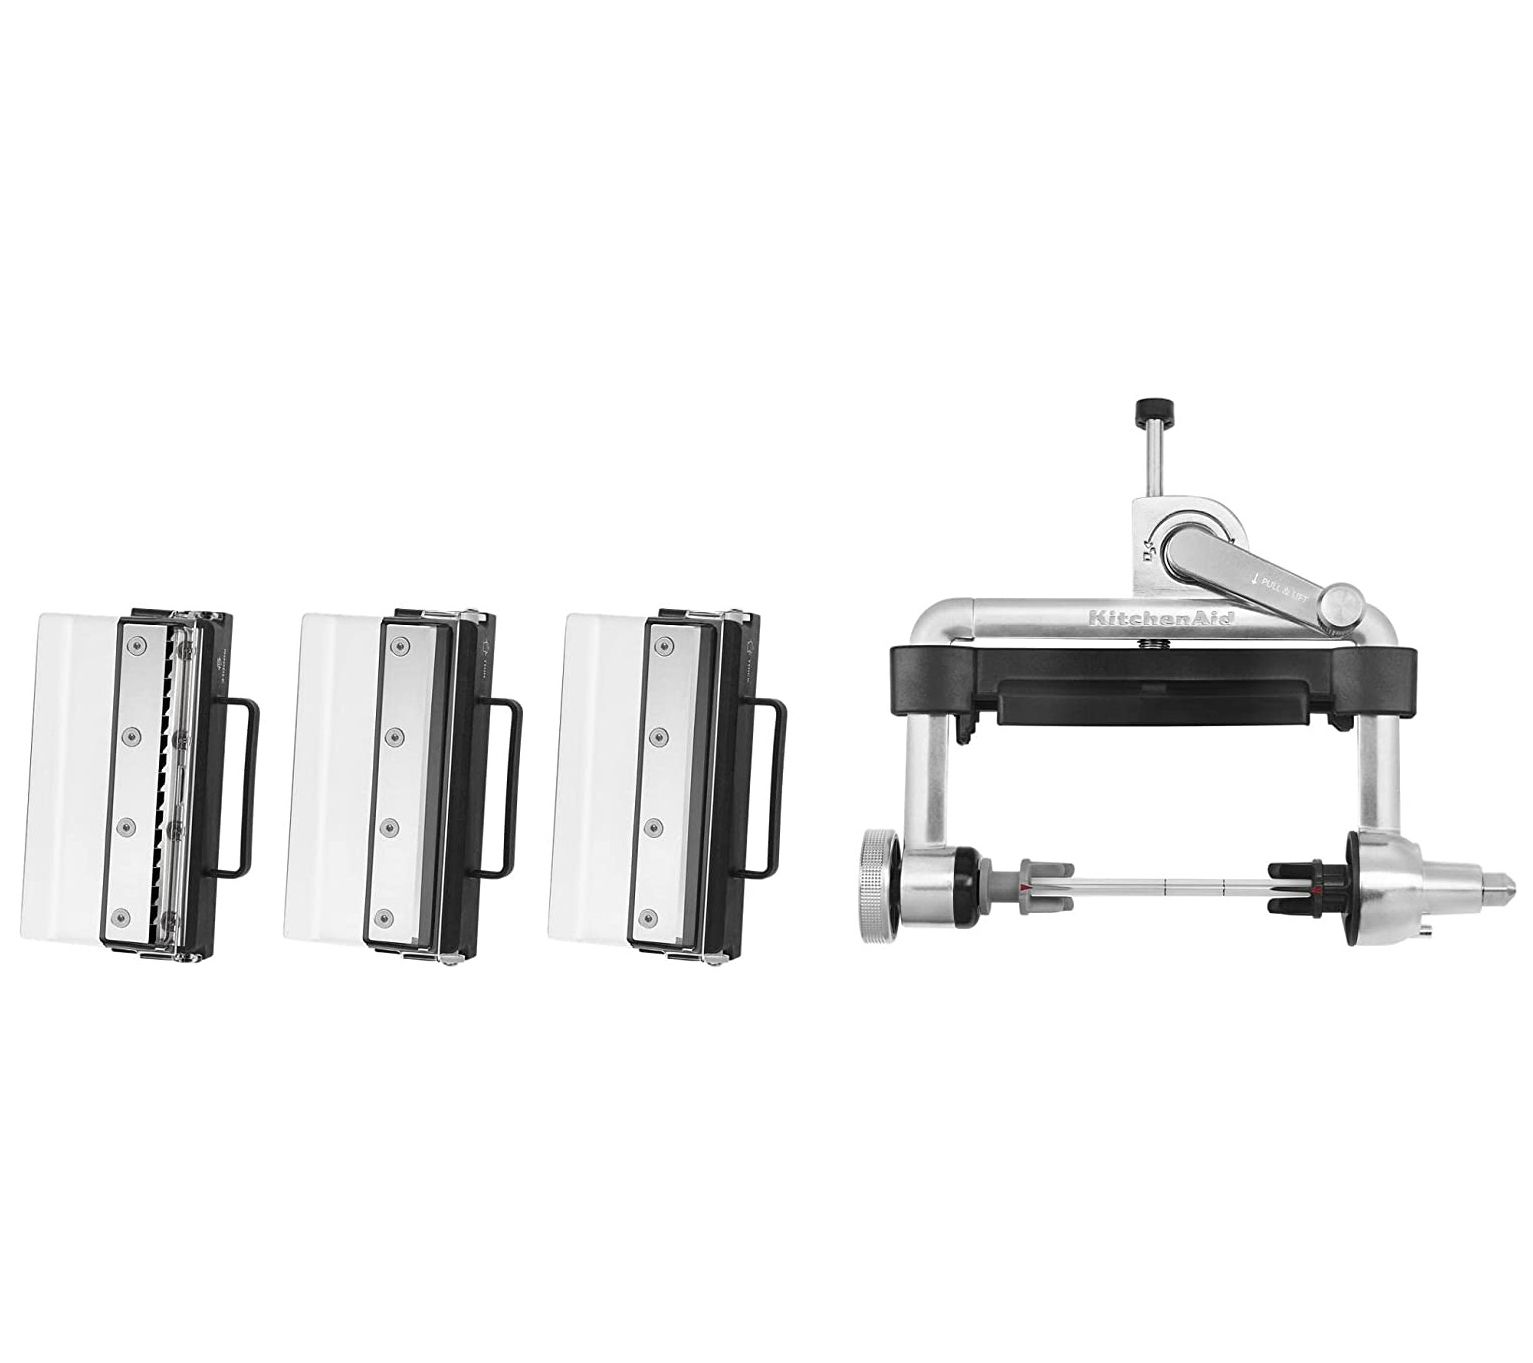 KitchenAid Sheet Cutter Stand Mixer Attachment on QVC 